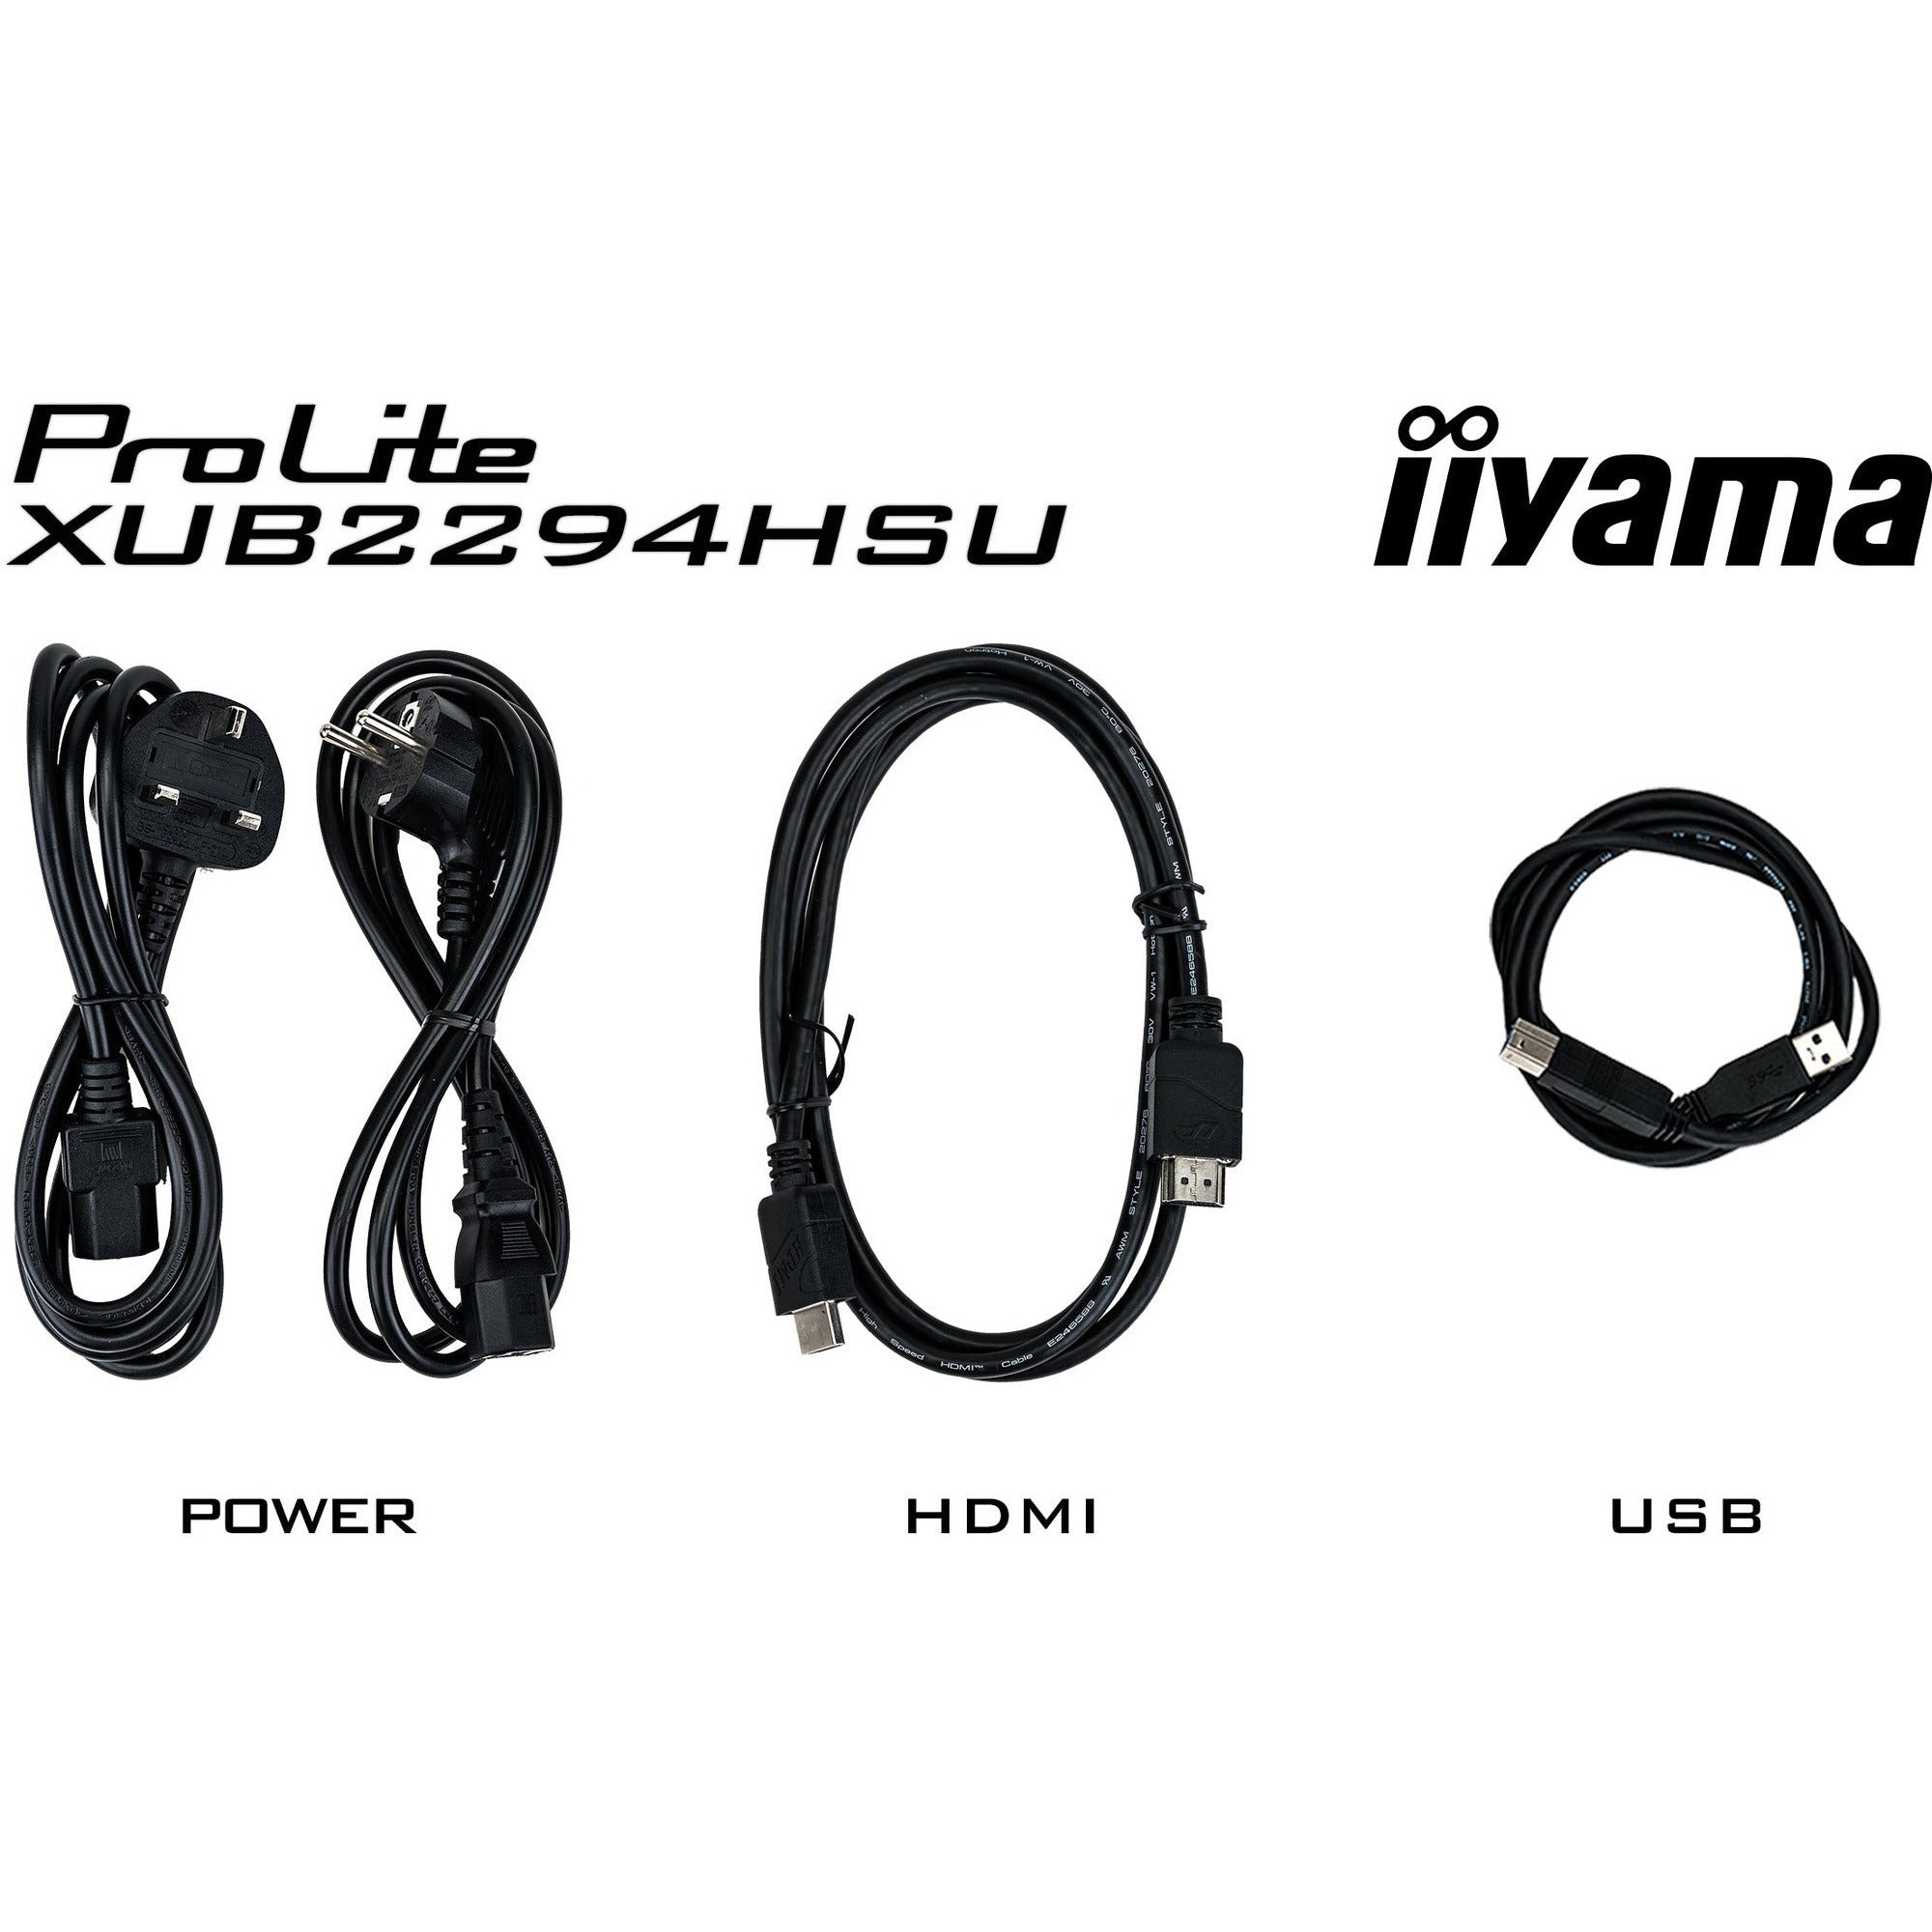 iiyama ProLite XUB2294HSU-B2 22" LCD HD Monitor